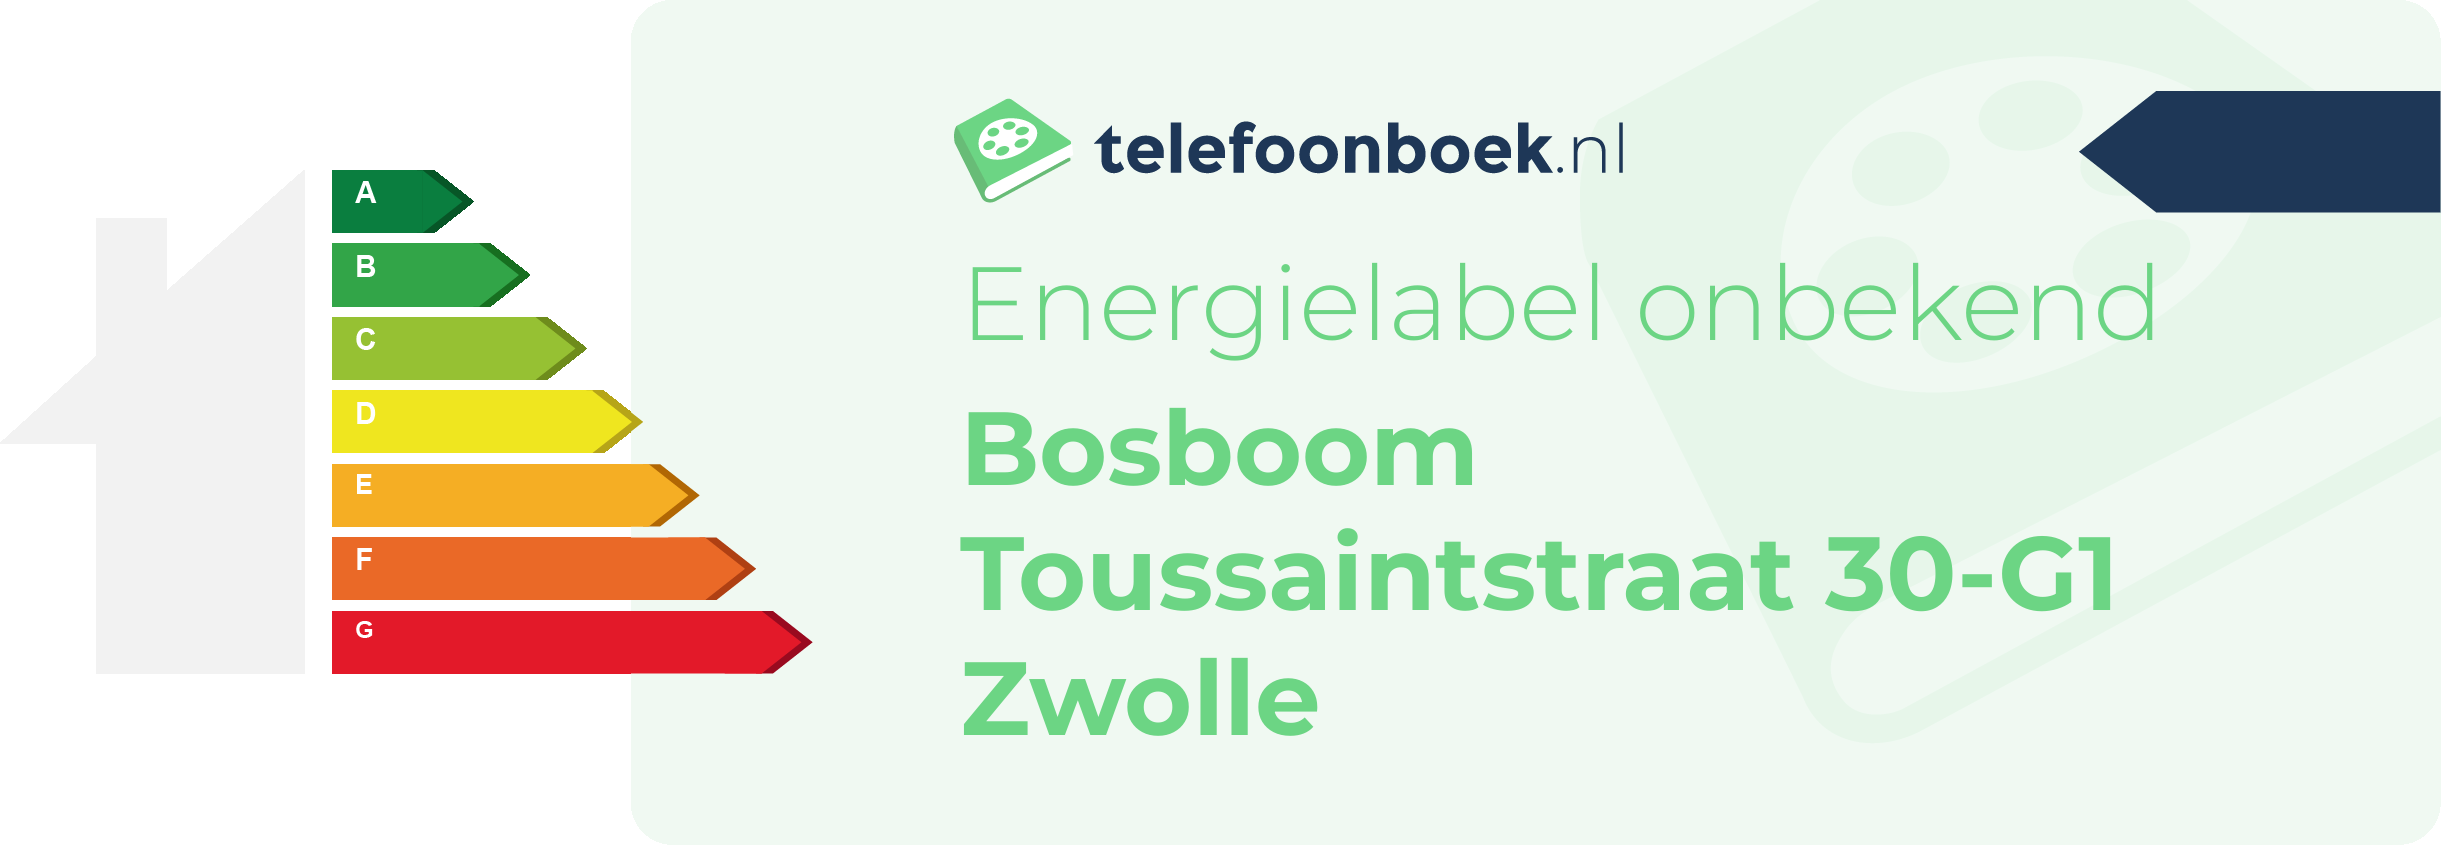 Energielabel Bosboom Toussaintstraat 30-G1 Zwolle